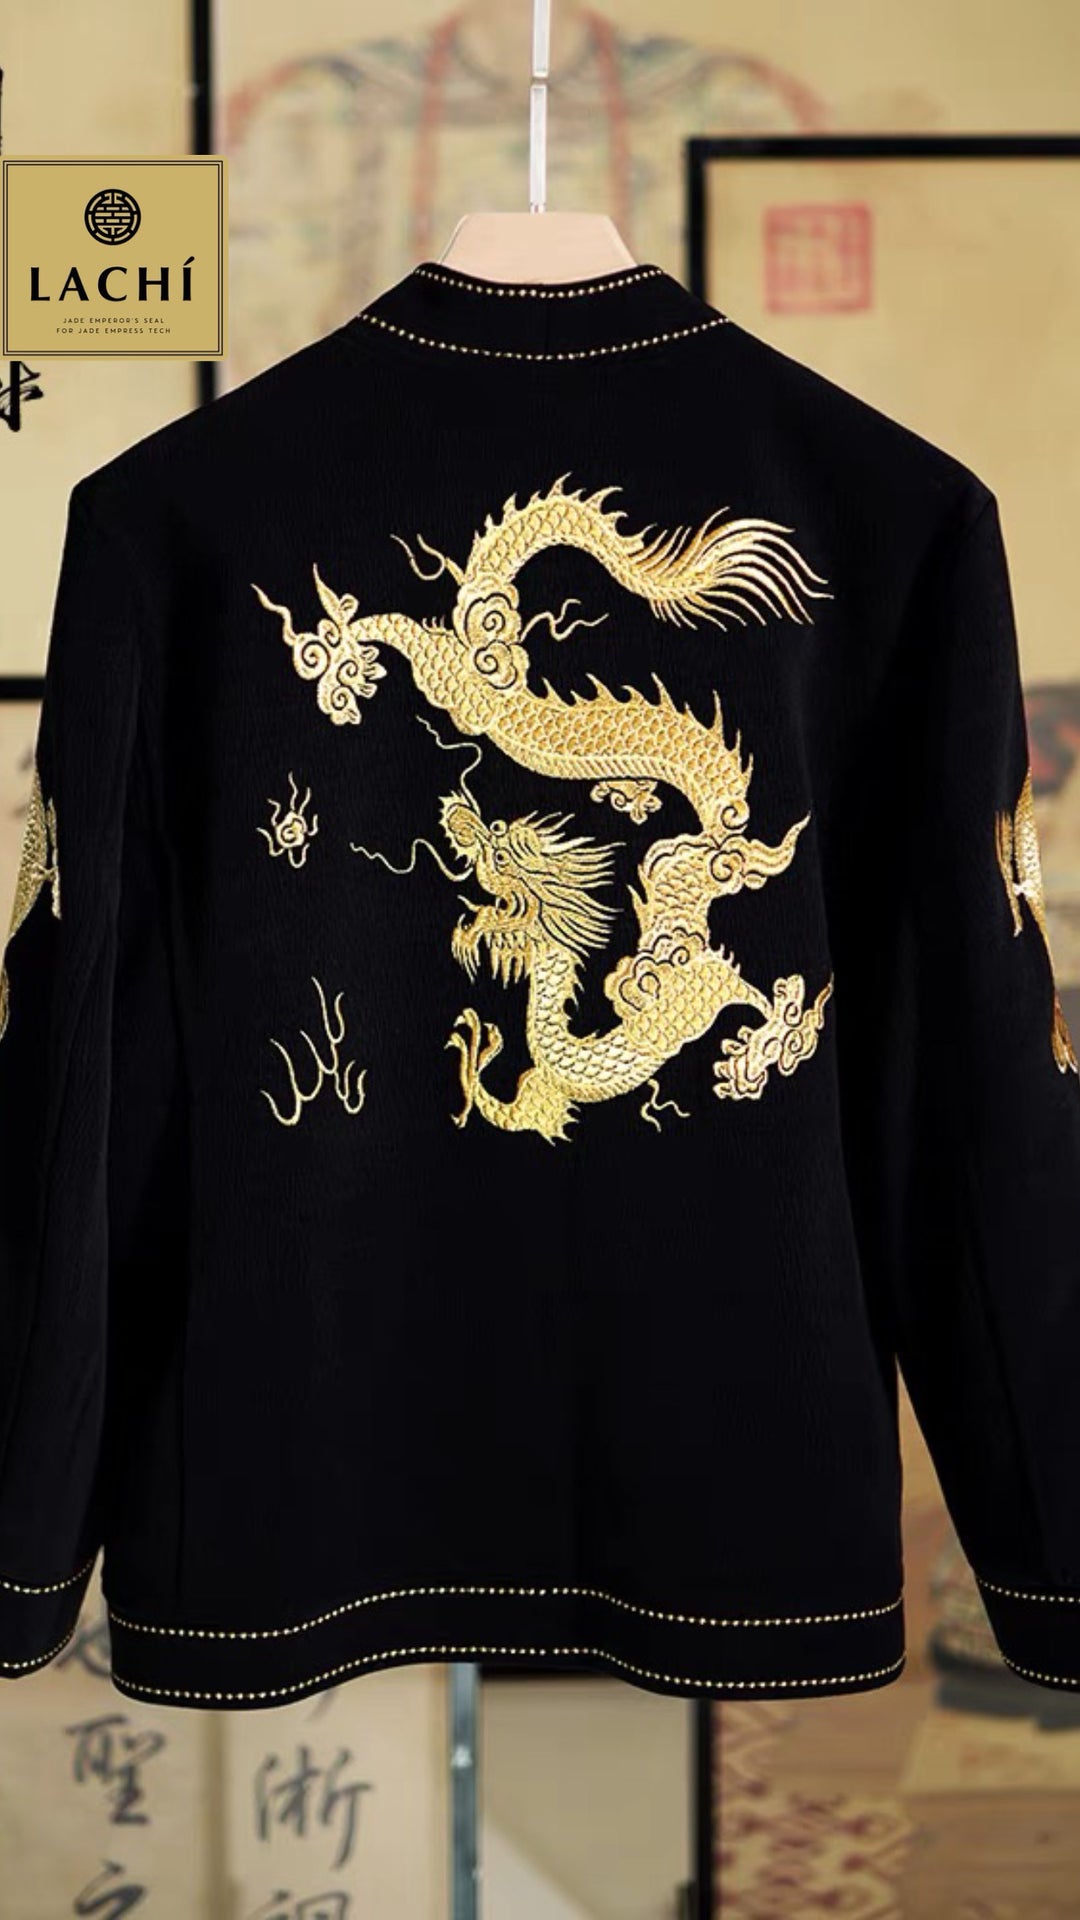 Tao Double Tech™ • Yang • Tao Golden Dragon Jacket • V-Neck • Golden Ratio Tailoring • Thermal Double-Layer • High Vibrational Art • Handmade Dragon Embroidery